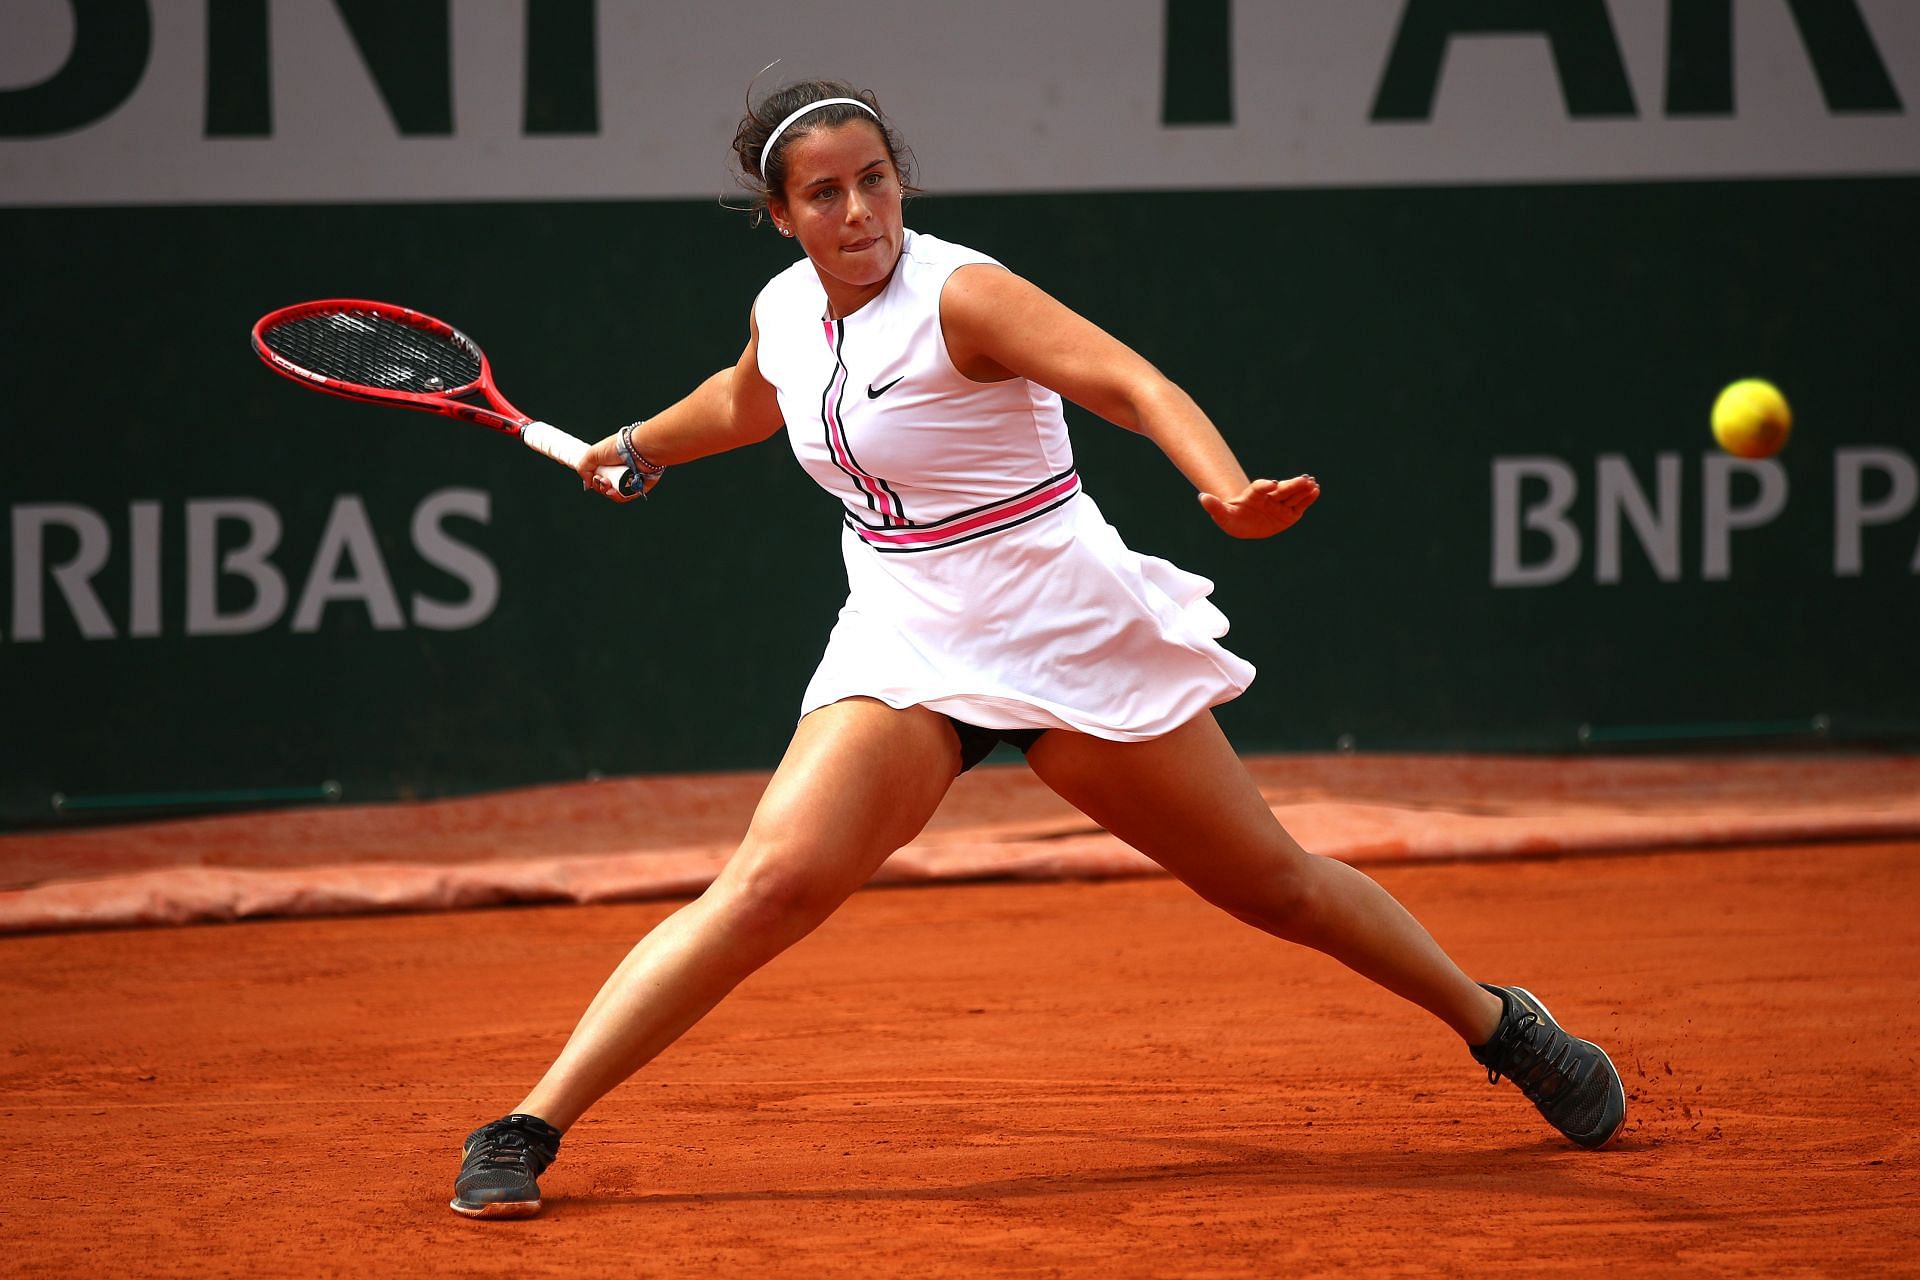 Emma Navarro reached the semifinals in San Diego last week.